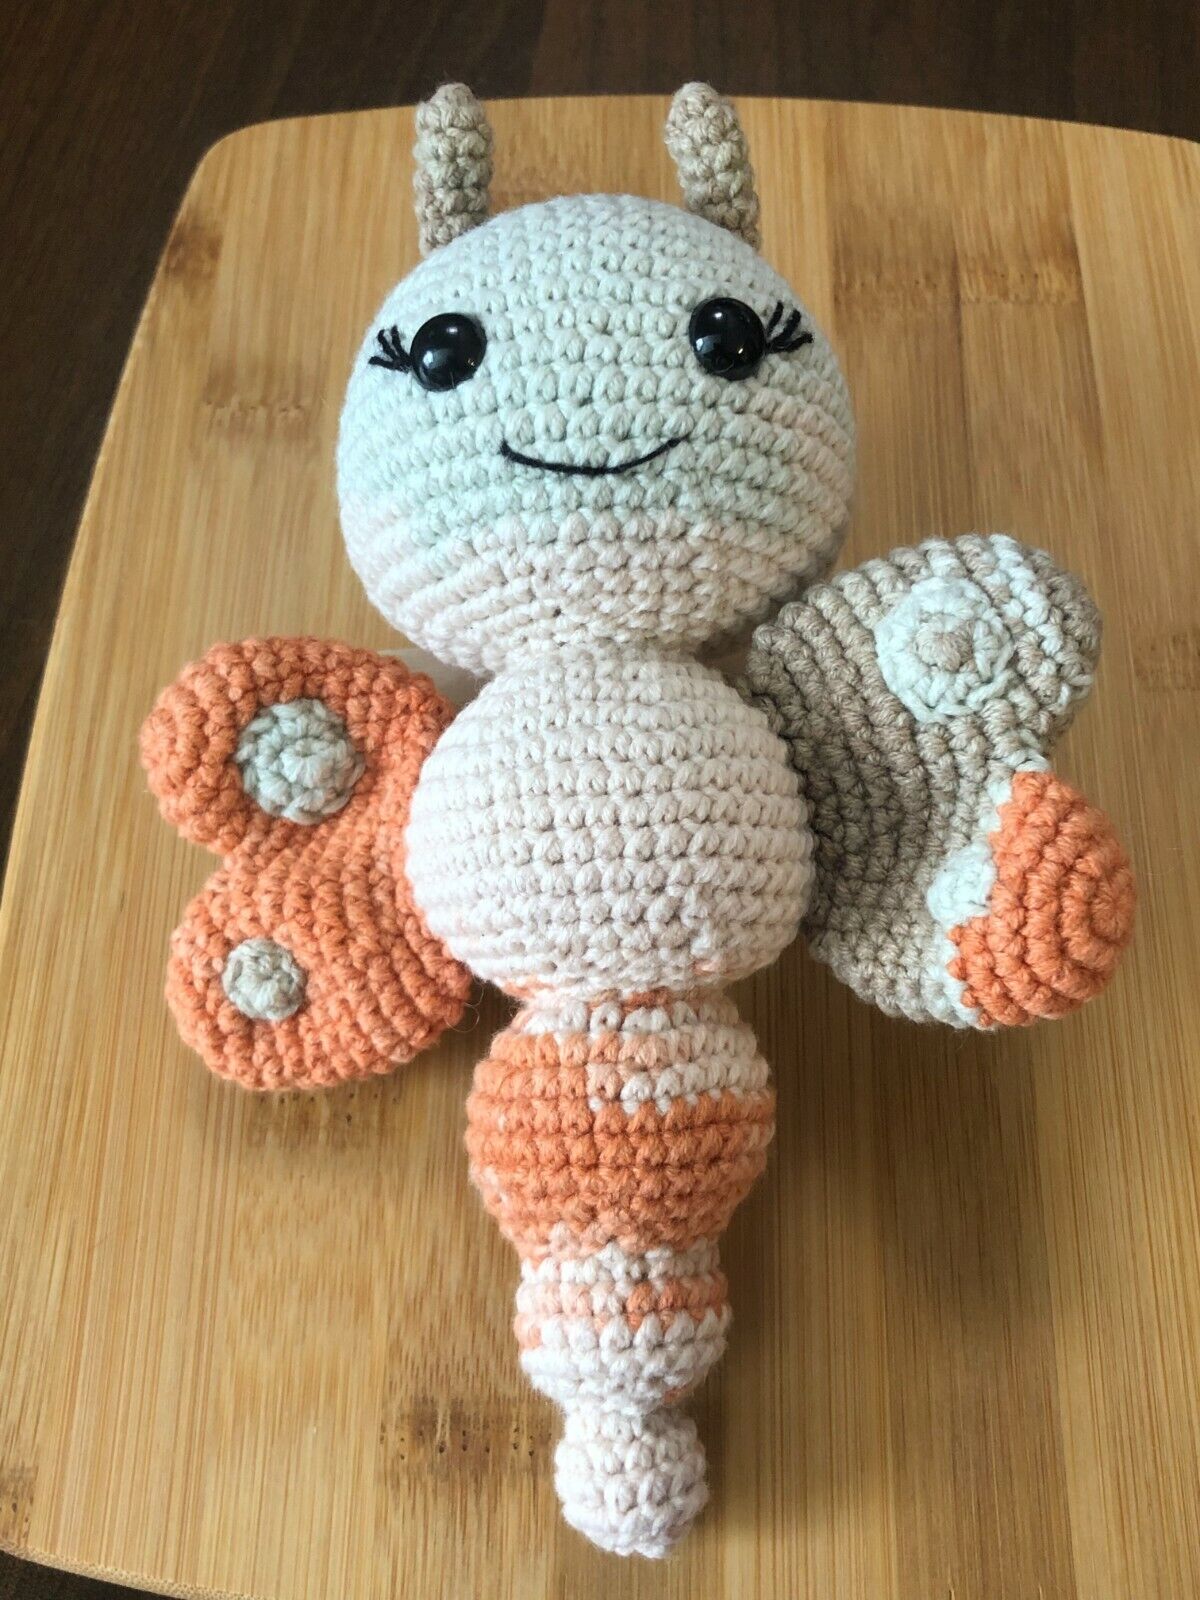 Handmade Crochet Snazzy Butterfly  Orange-ish Stuffed Animals Amigurumi New Toy